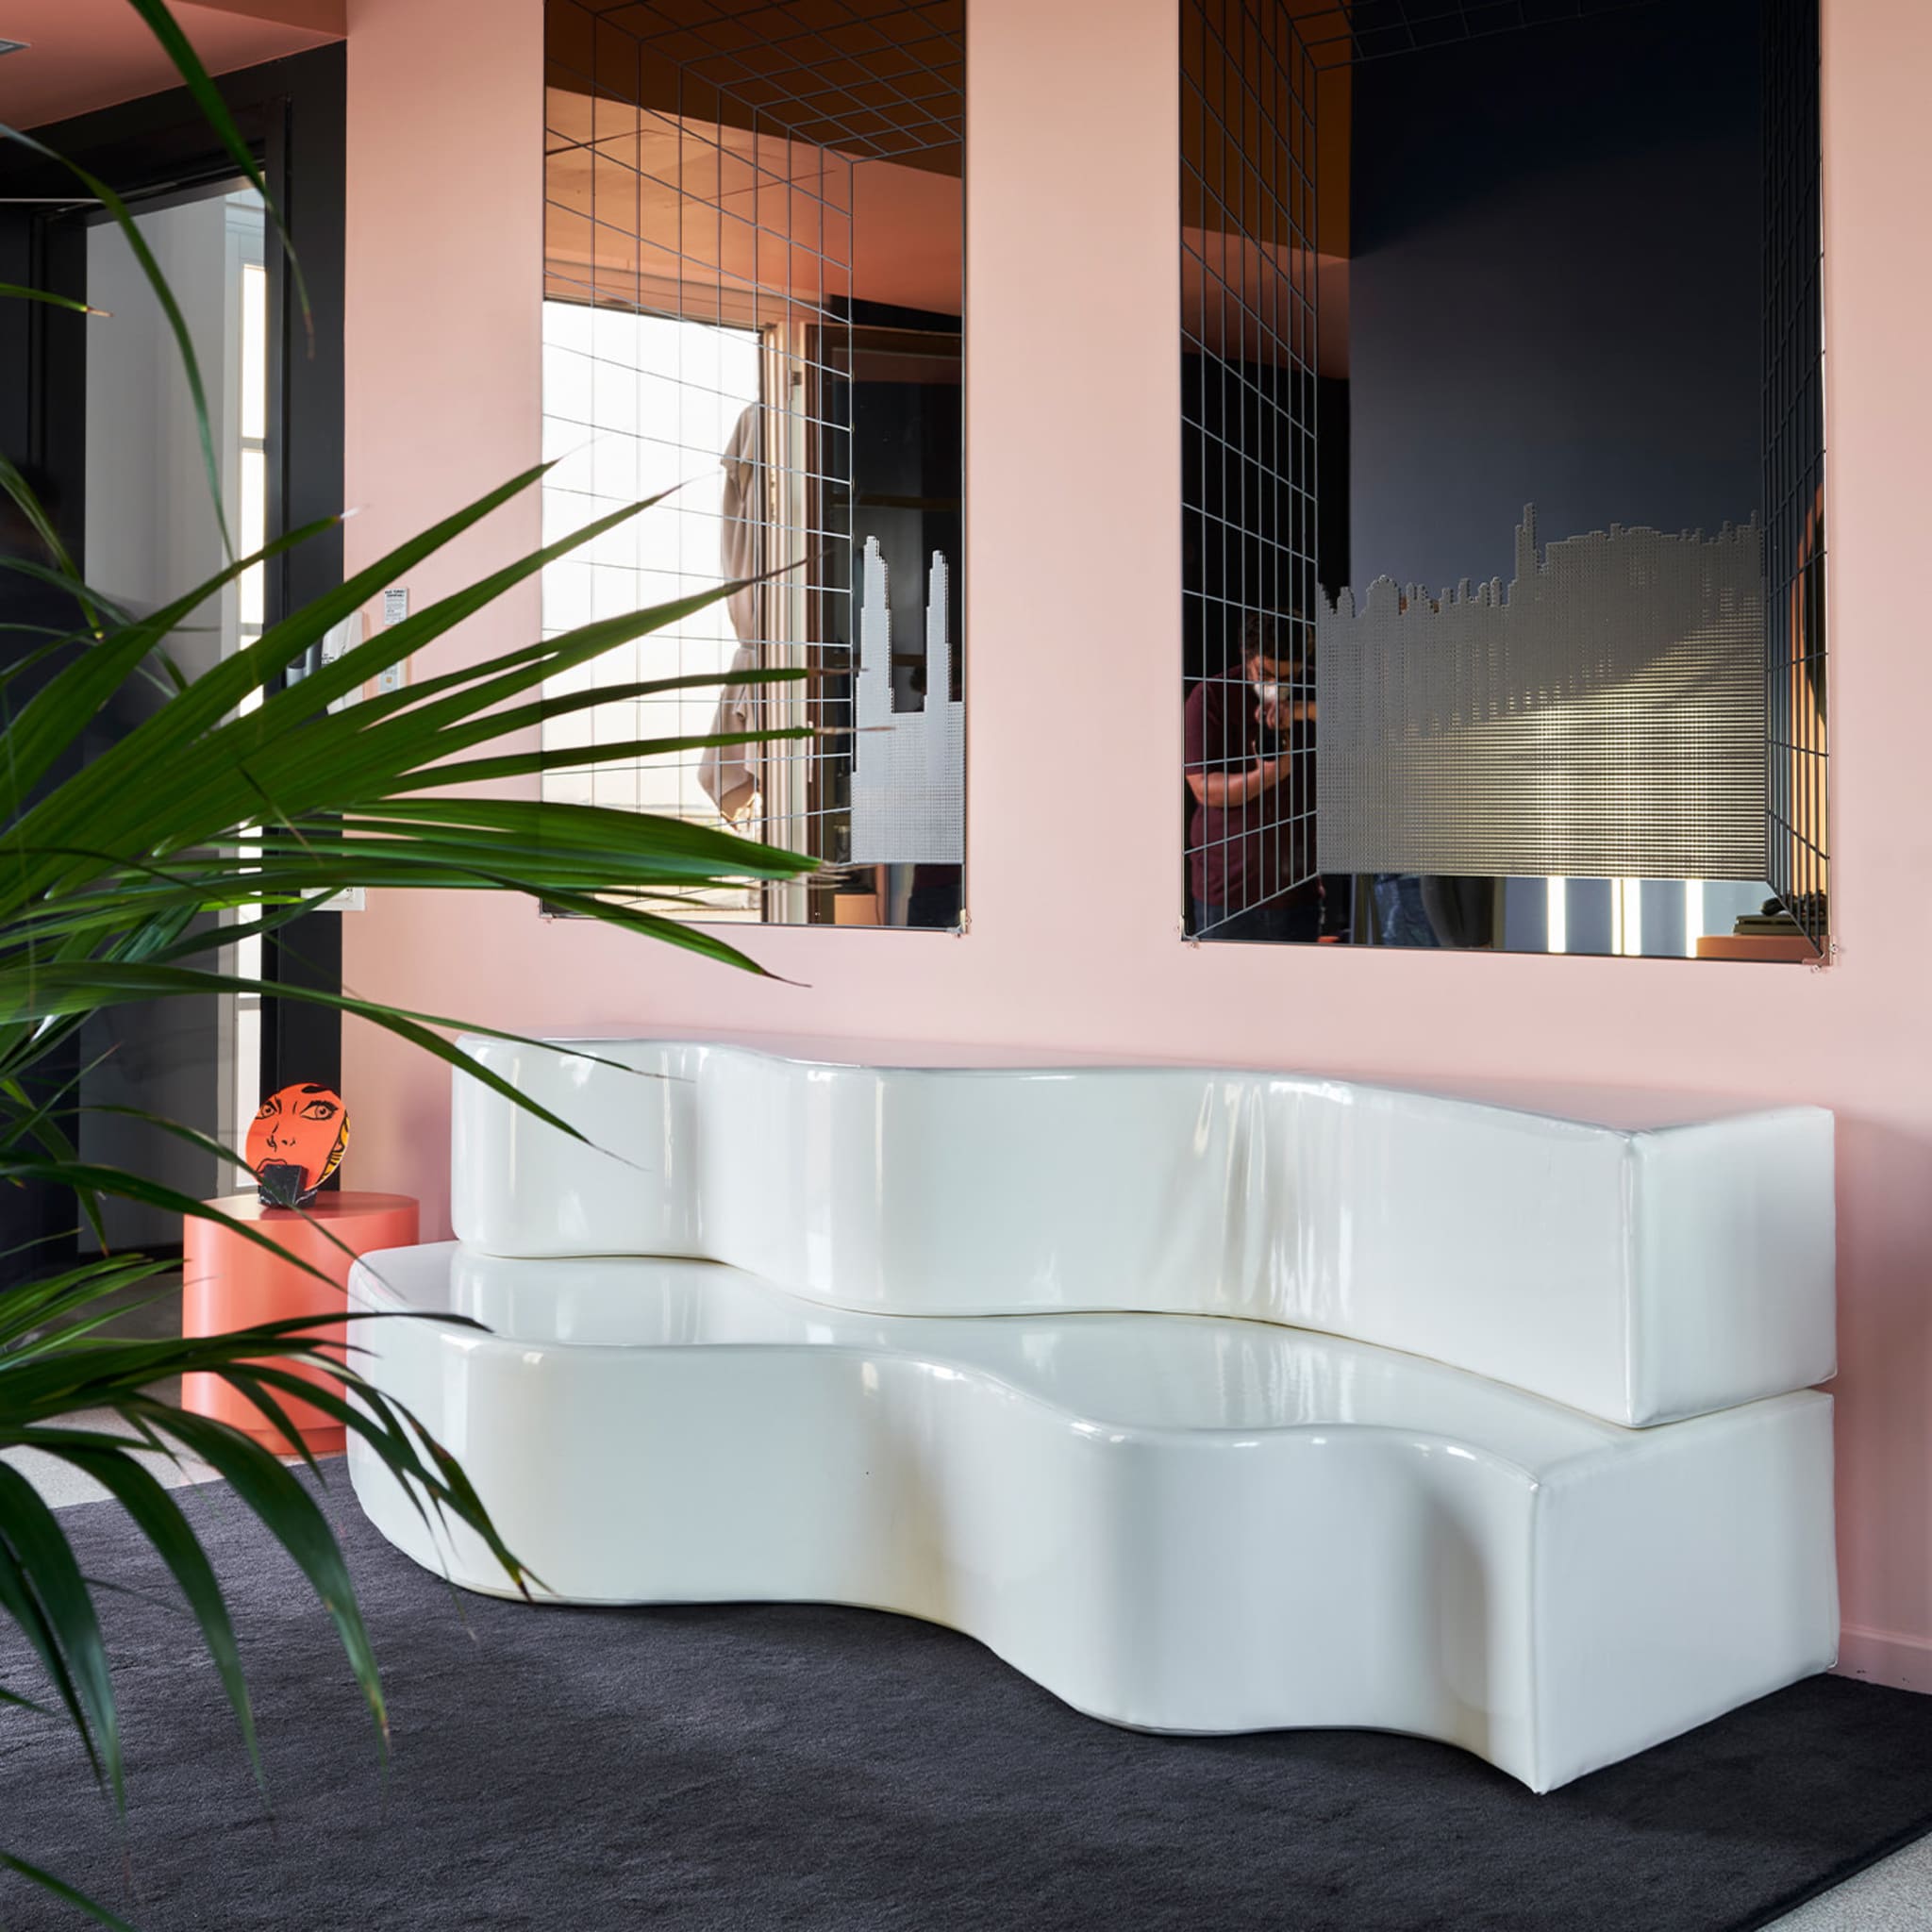 Superonda White Sofa by Archizoom - Alternative view 2